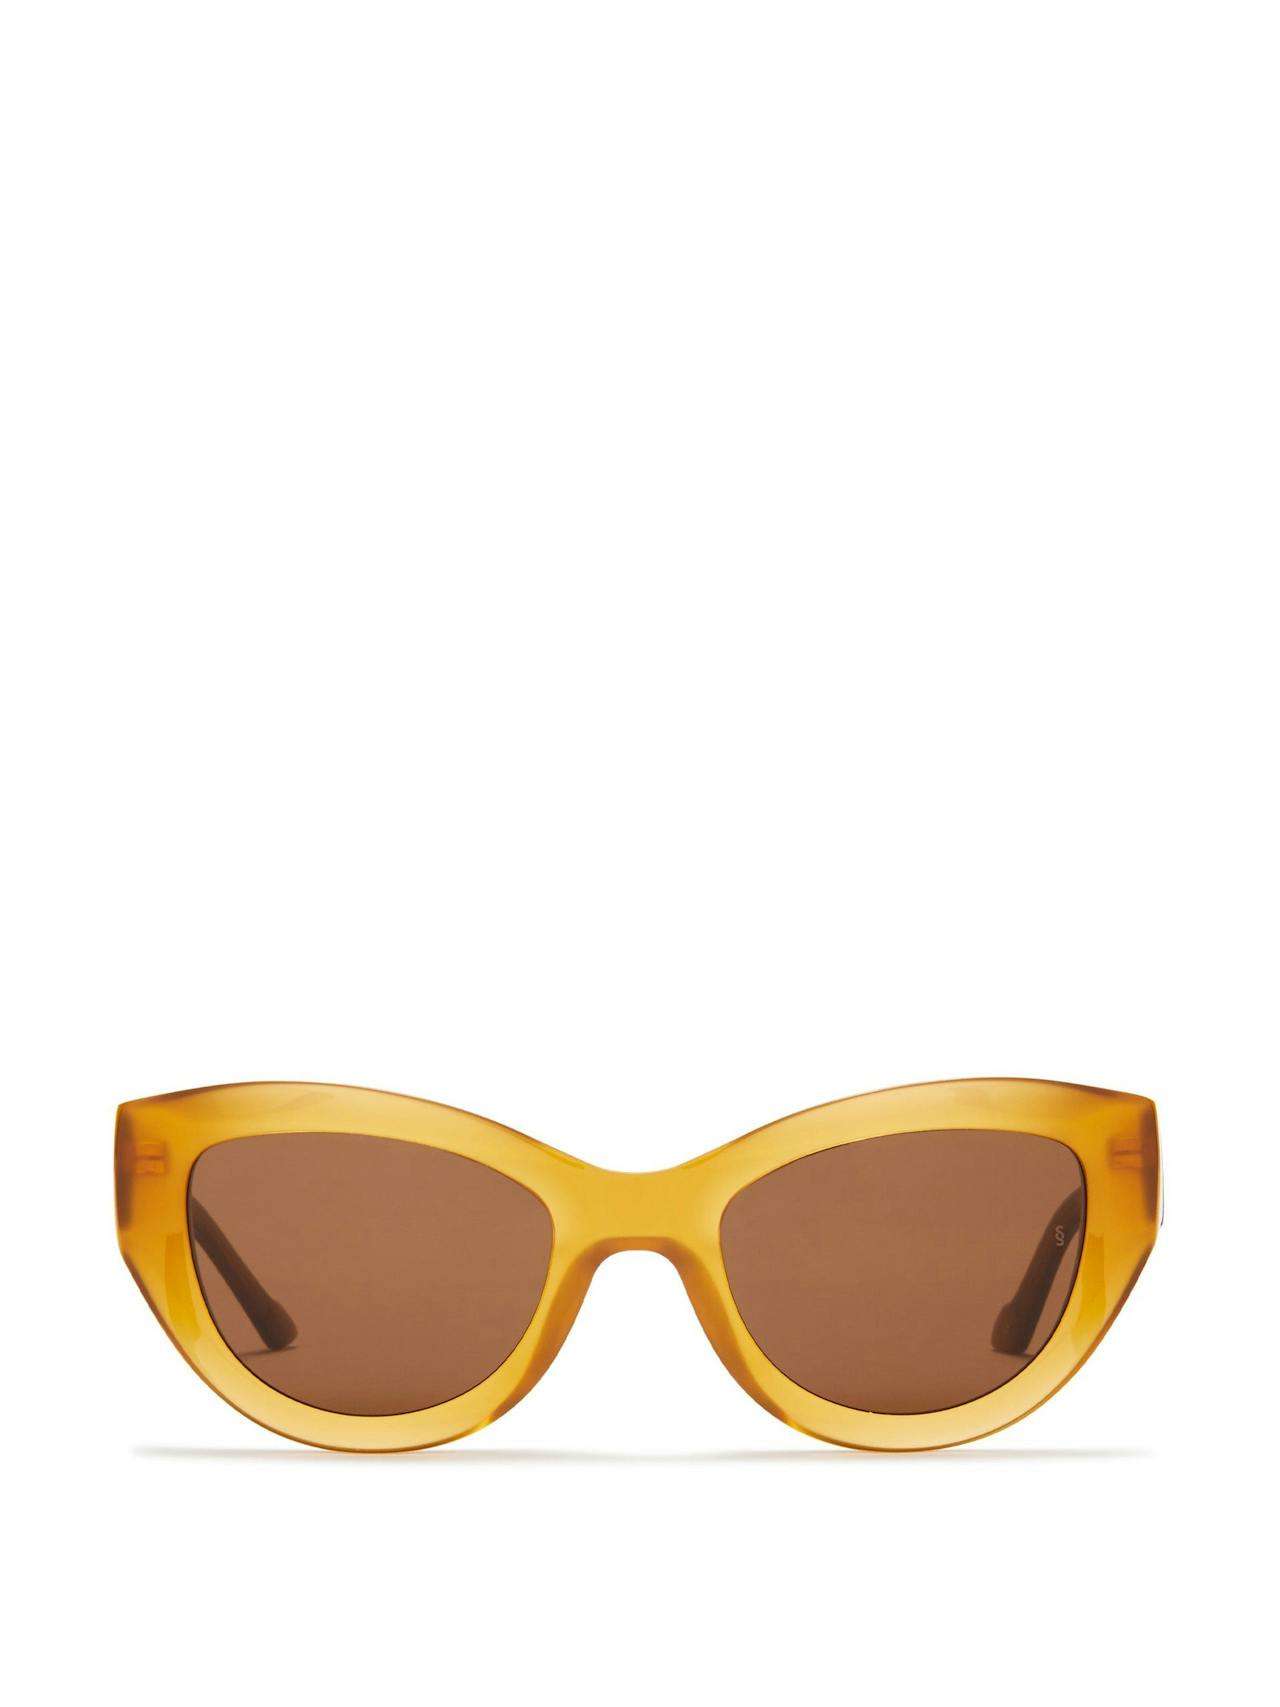 Amber Harper sunglasses